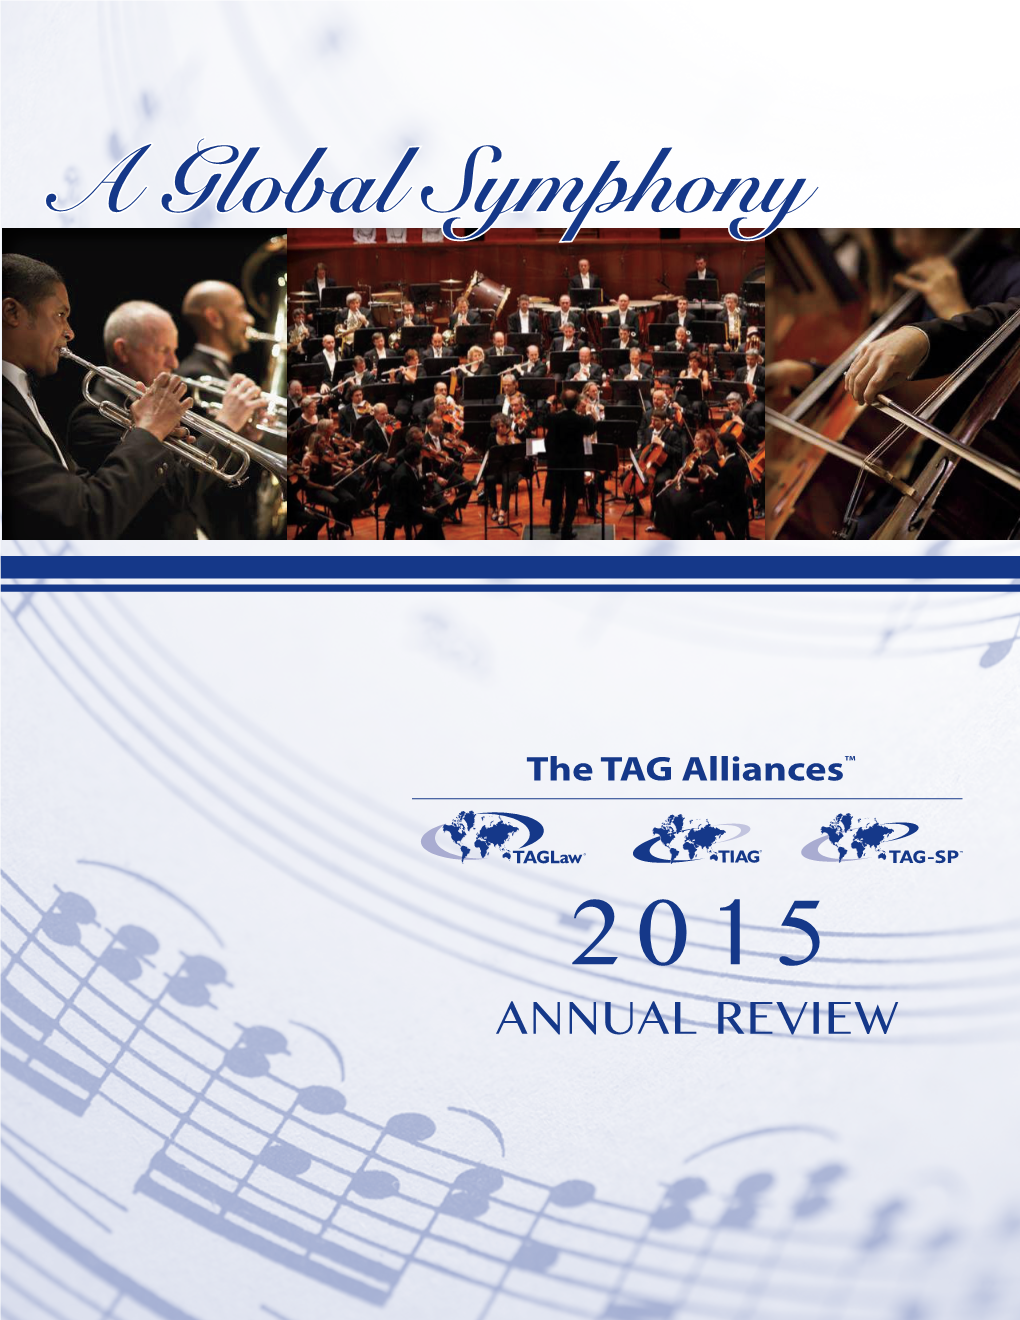 A Global Symphony